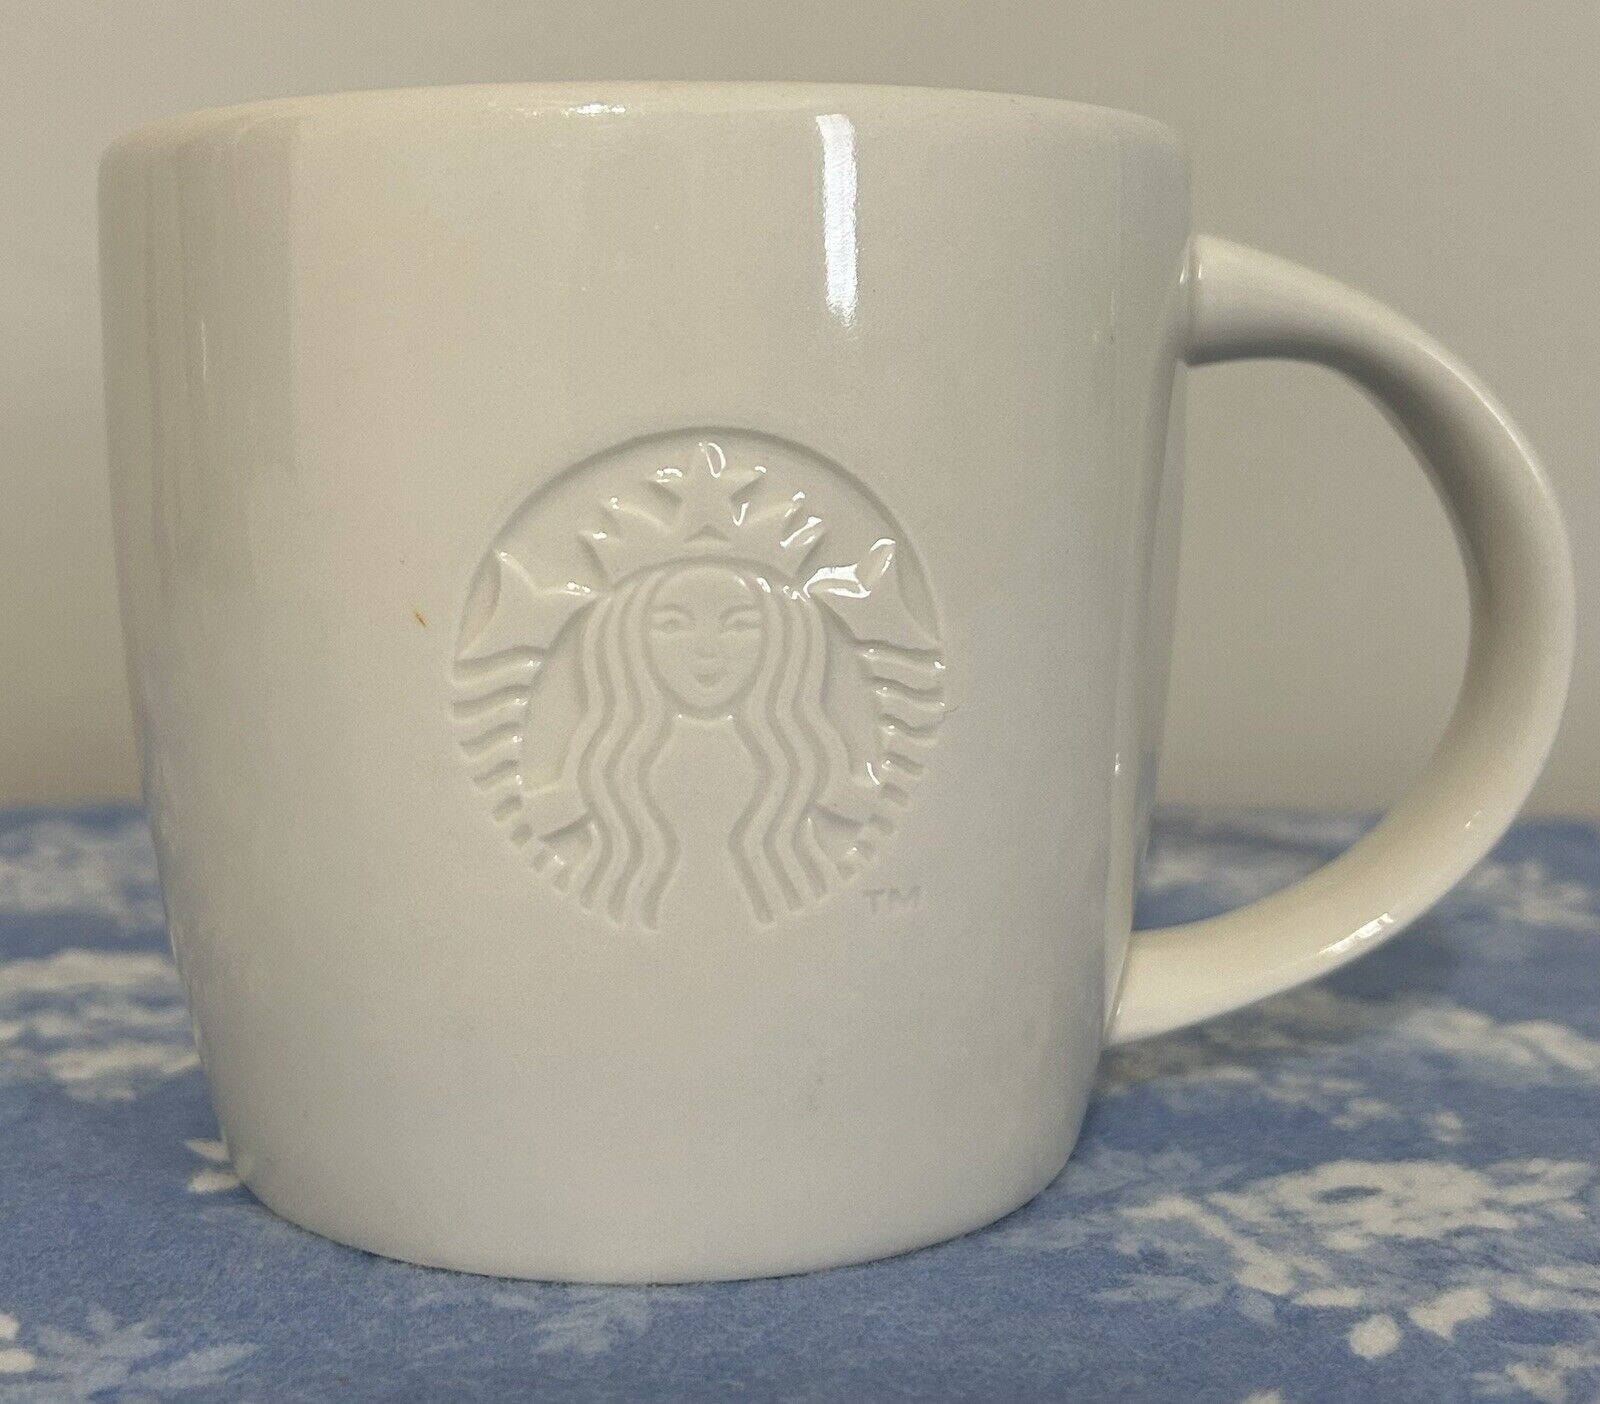 Starbucks 2015 coffee mug solid white etched embossed mermaid siren logo